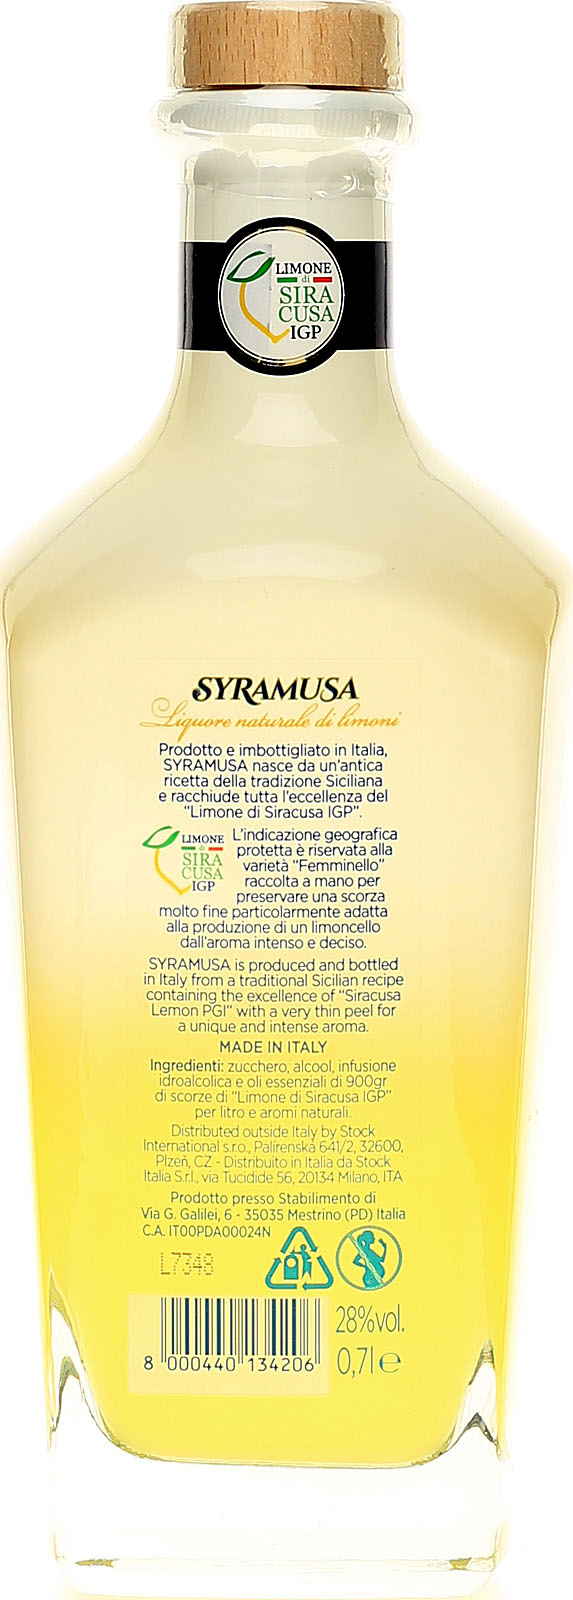 Limonce Syramusa Limoncello Zitronenlikör 0,7 Liter 28